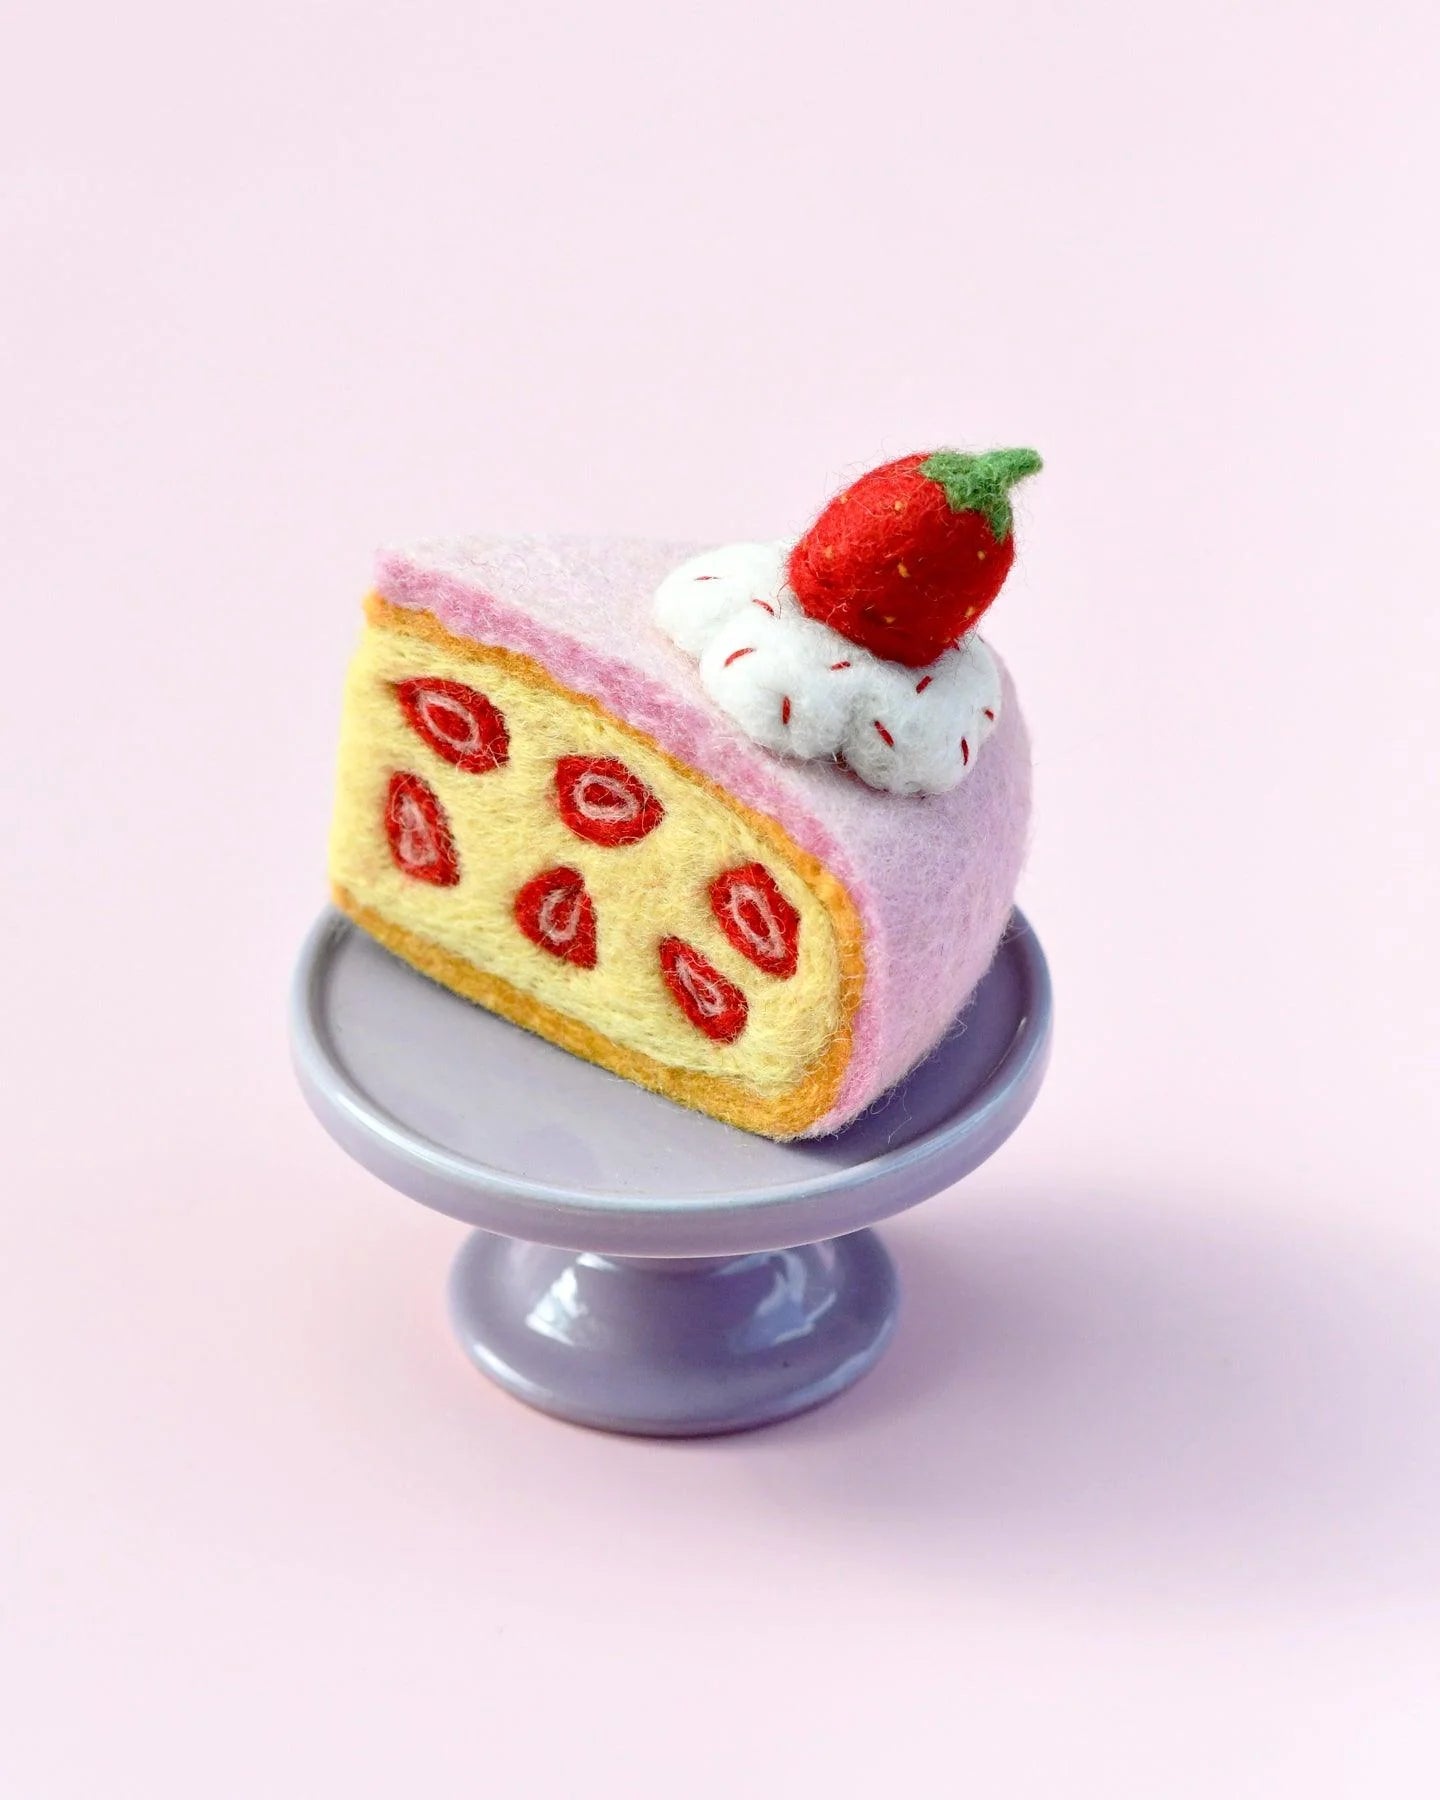 Felt Strawberry Torte cake slice